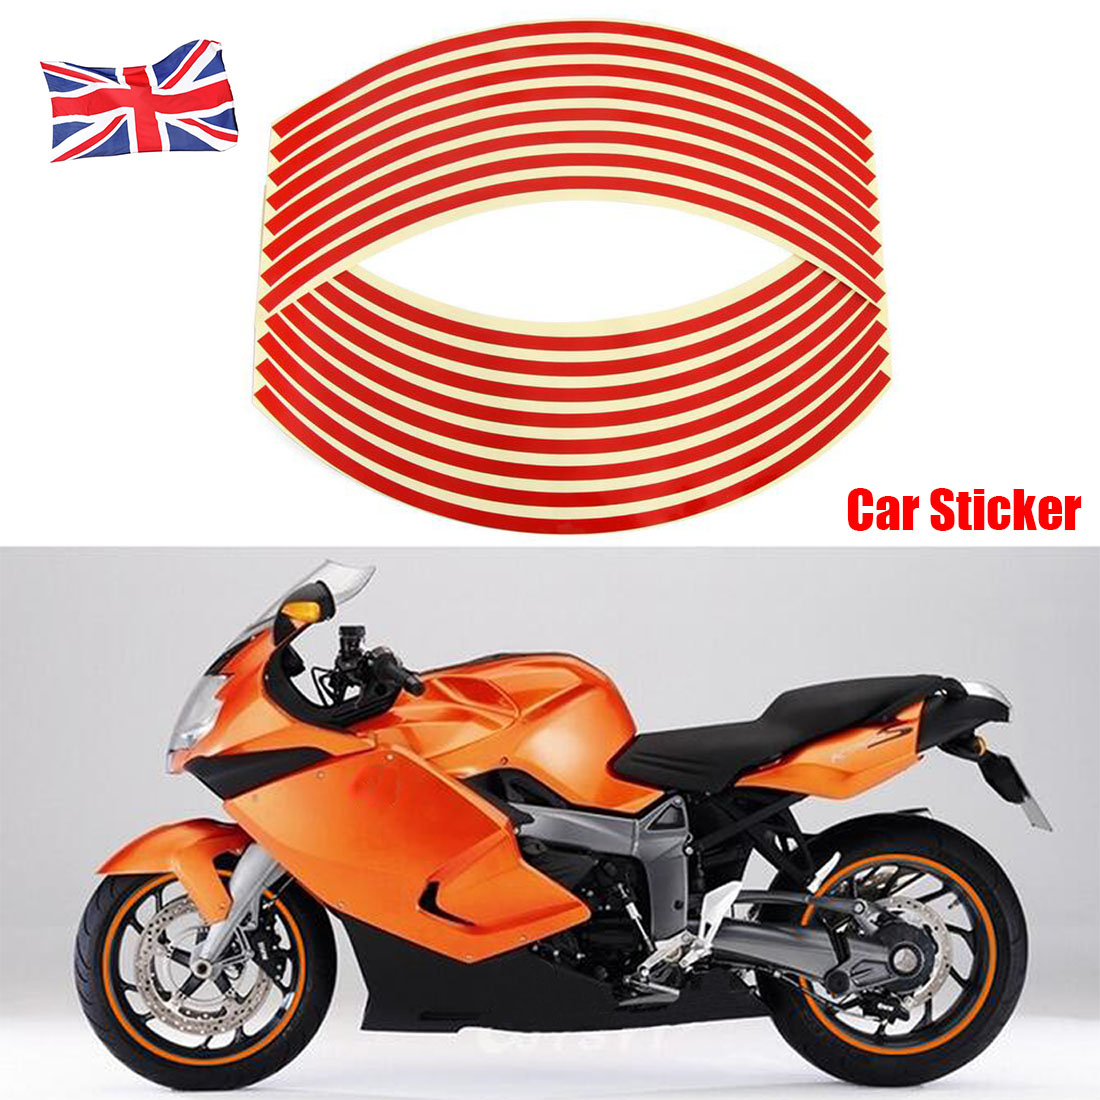 Orange Reflective Car Motorcycle Rim Stripes Wheel Decals Stickers 17 Inch Car